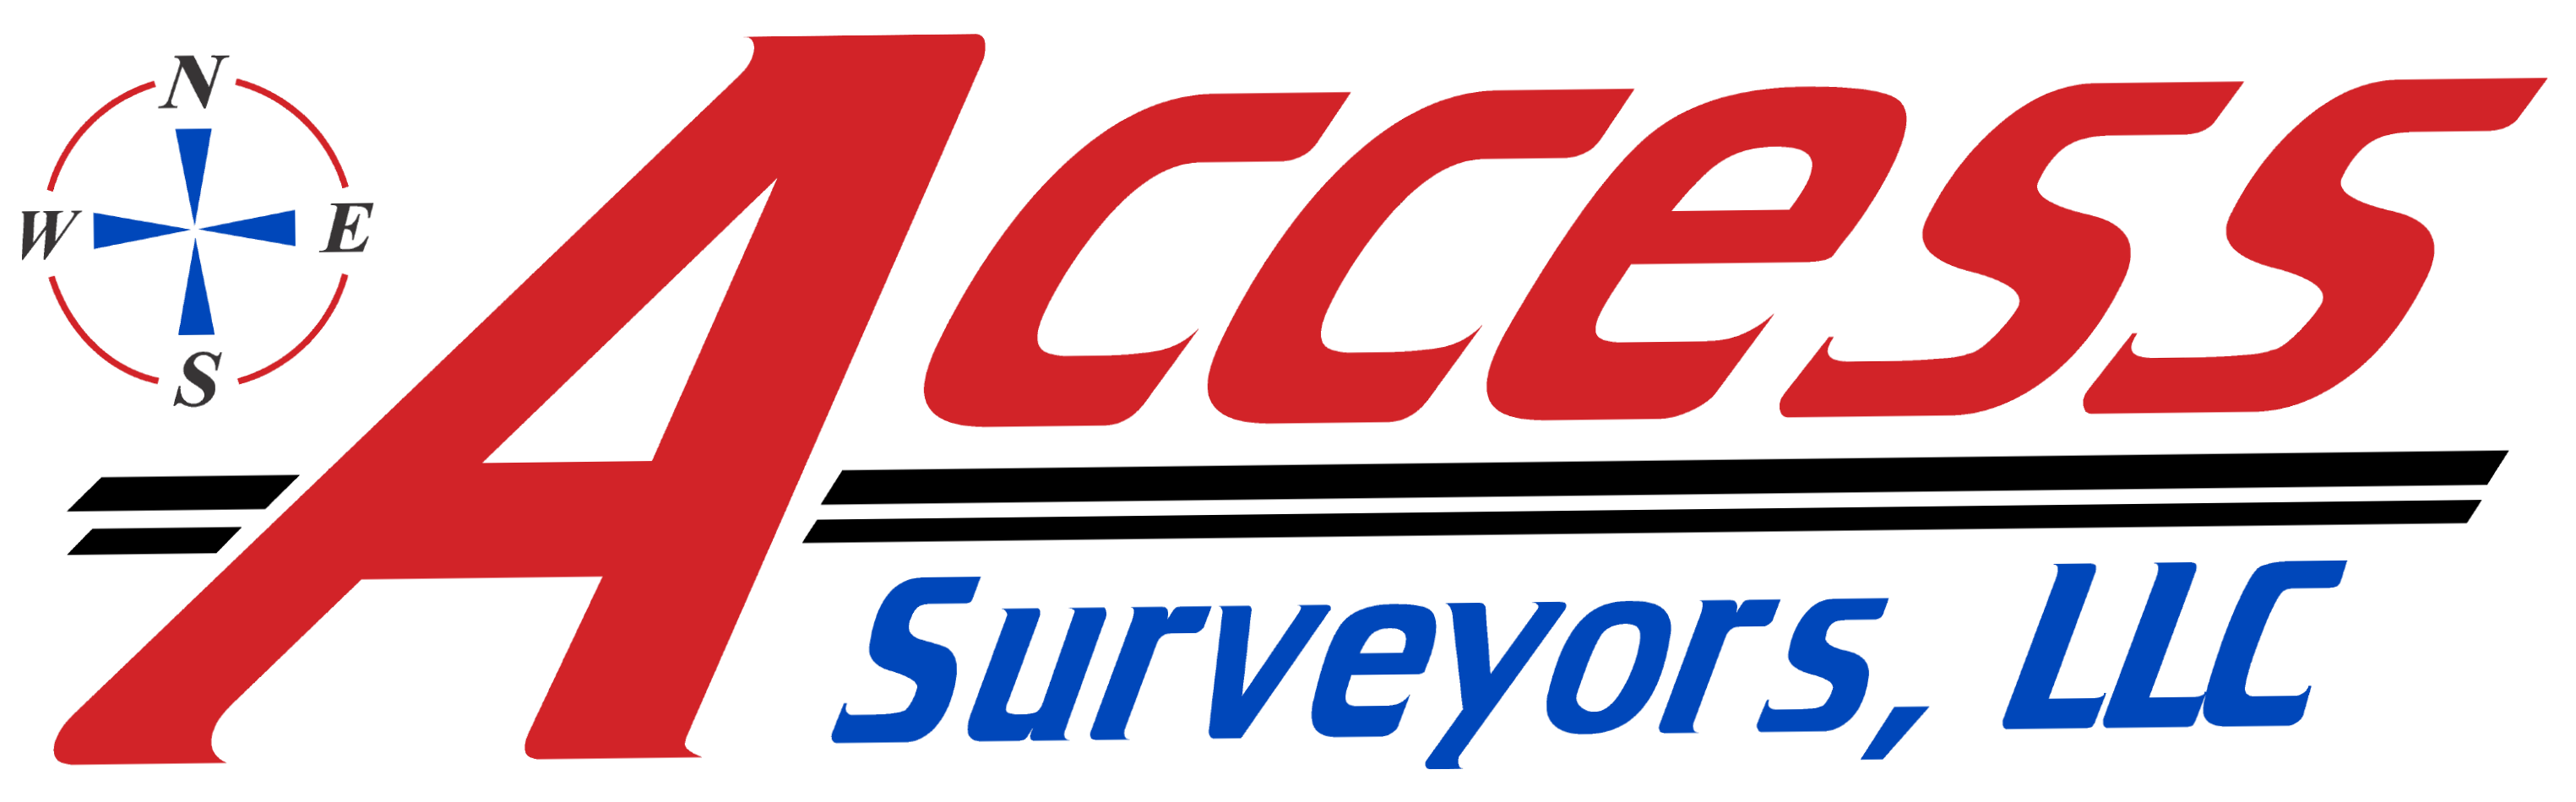 Access LLC Logo